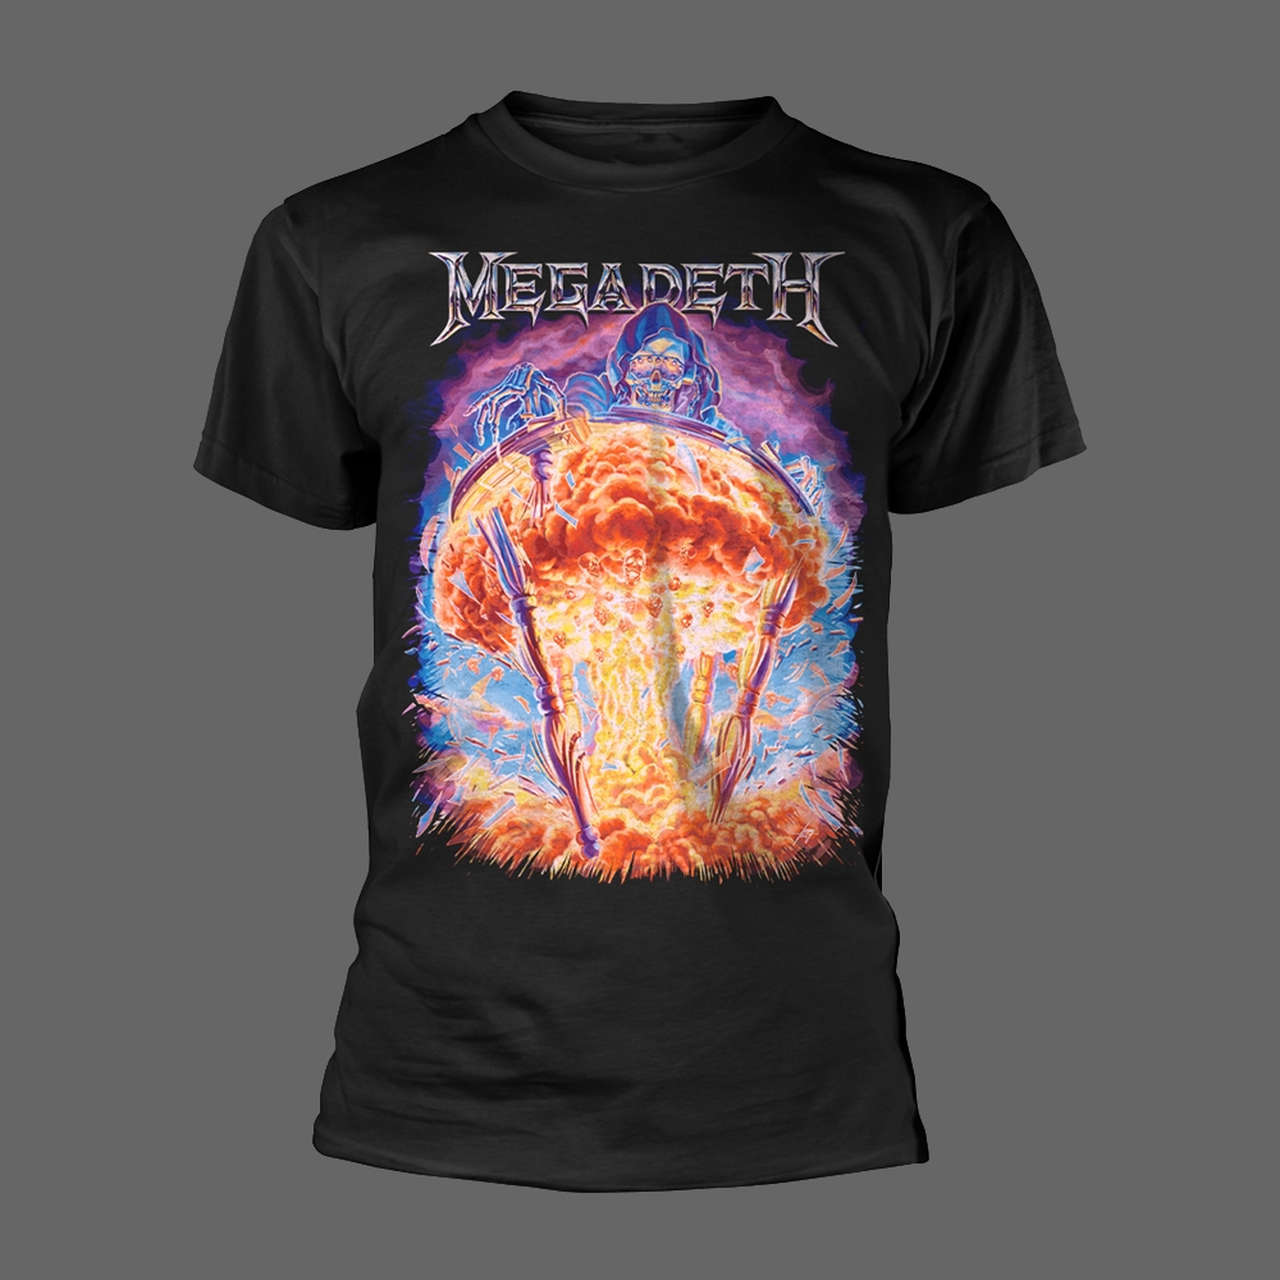 Megadeth - Countdown to Extinction (Bomb) (T-Shirt)